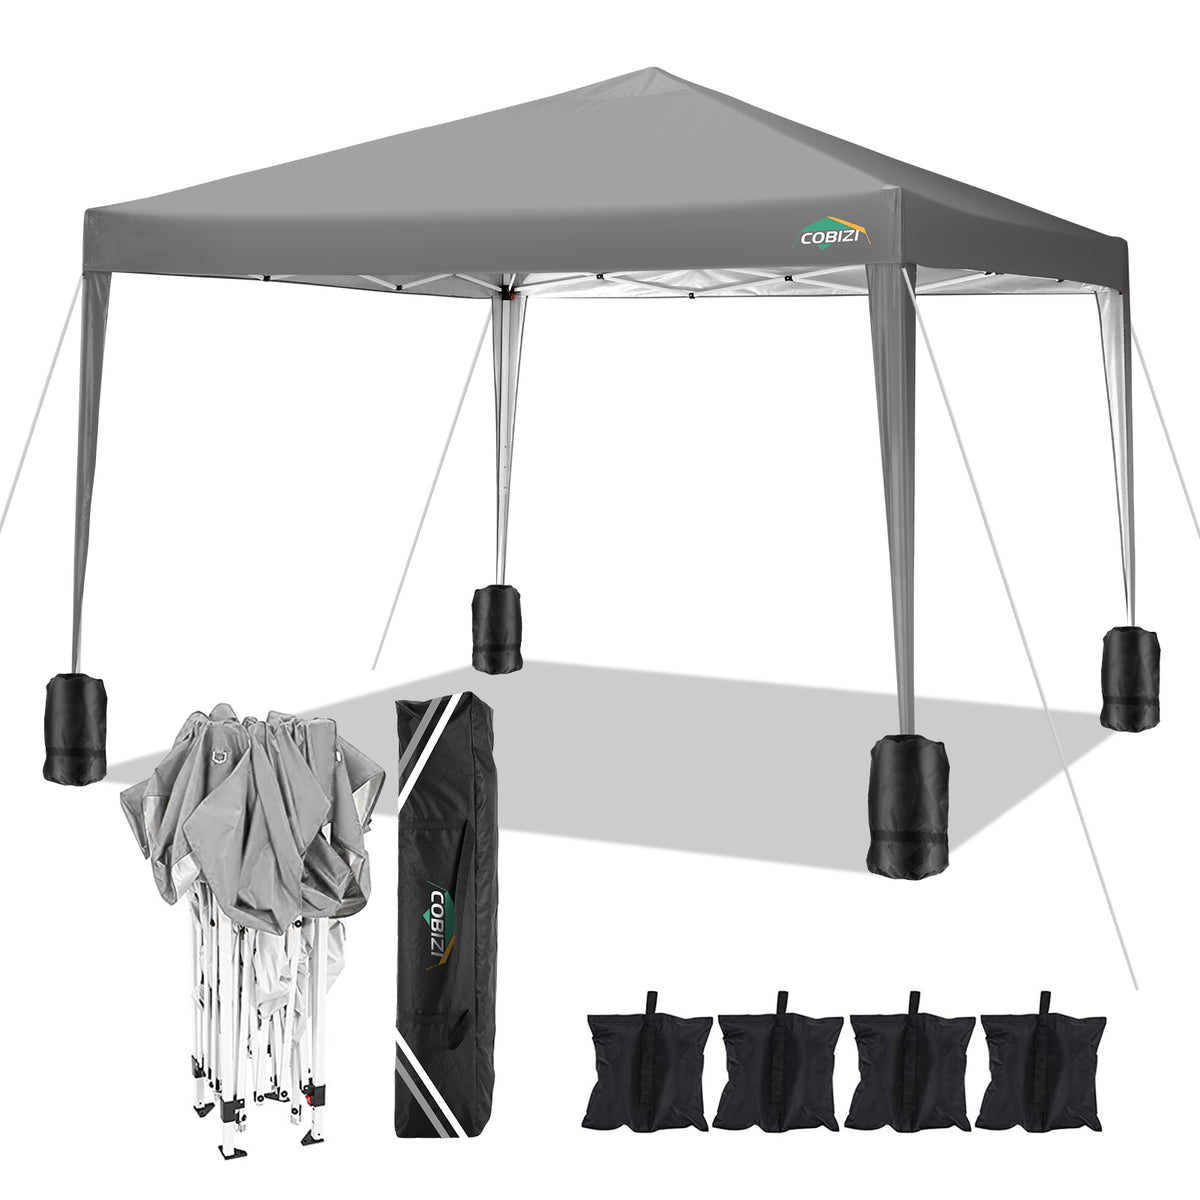 COBIZI 10x10 Ez Pop Up Canopy Tent, Commercial Instant Gazebo Tents for Parties, Waterproof Adjustable Outdoor Patio Backyard Canopy Party Tent,Gray